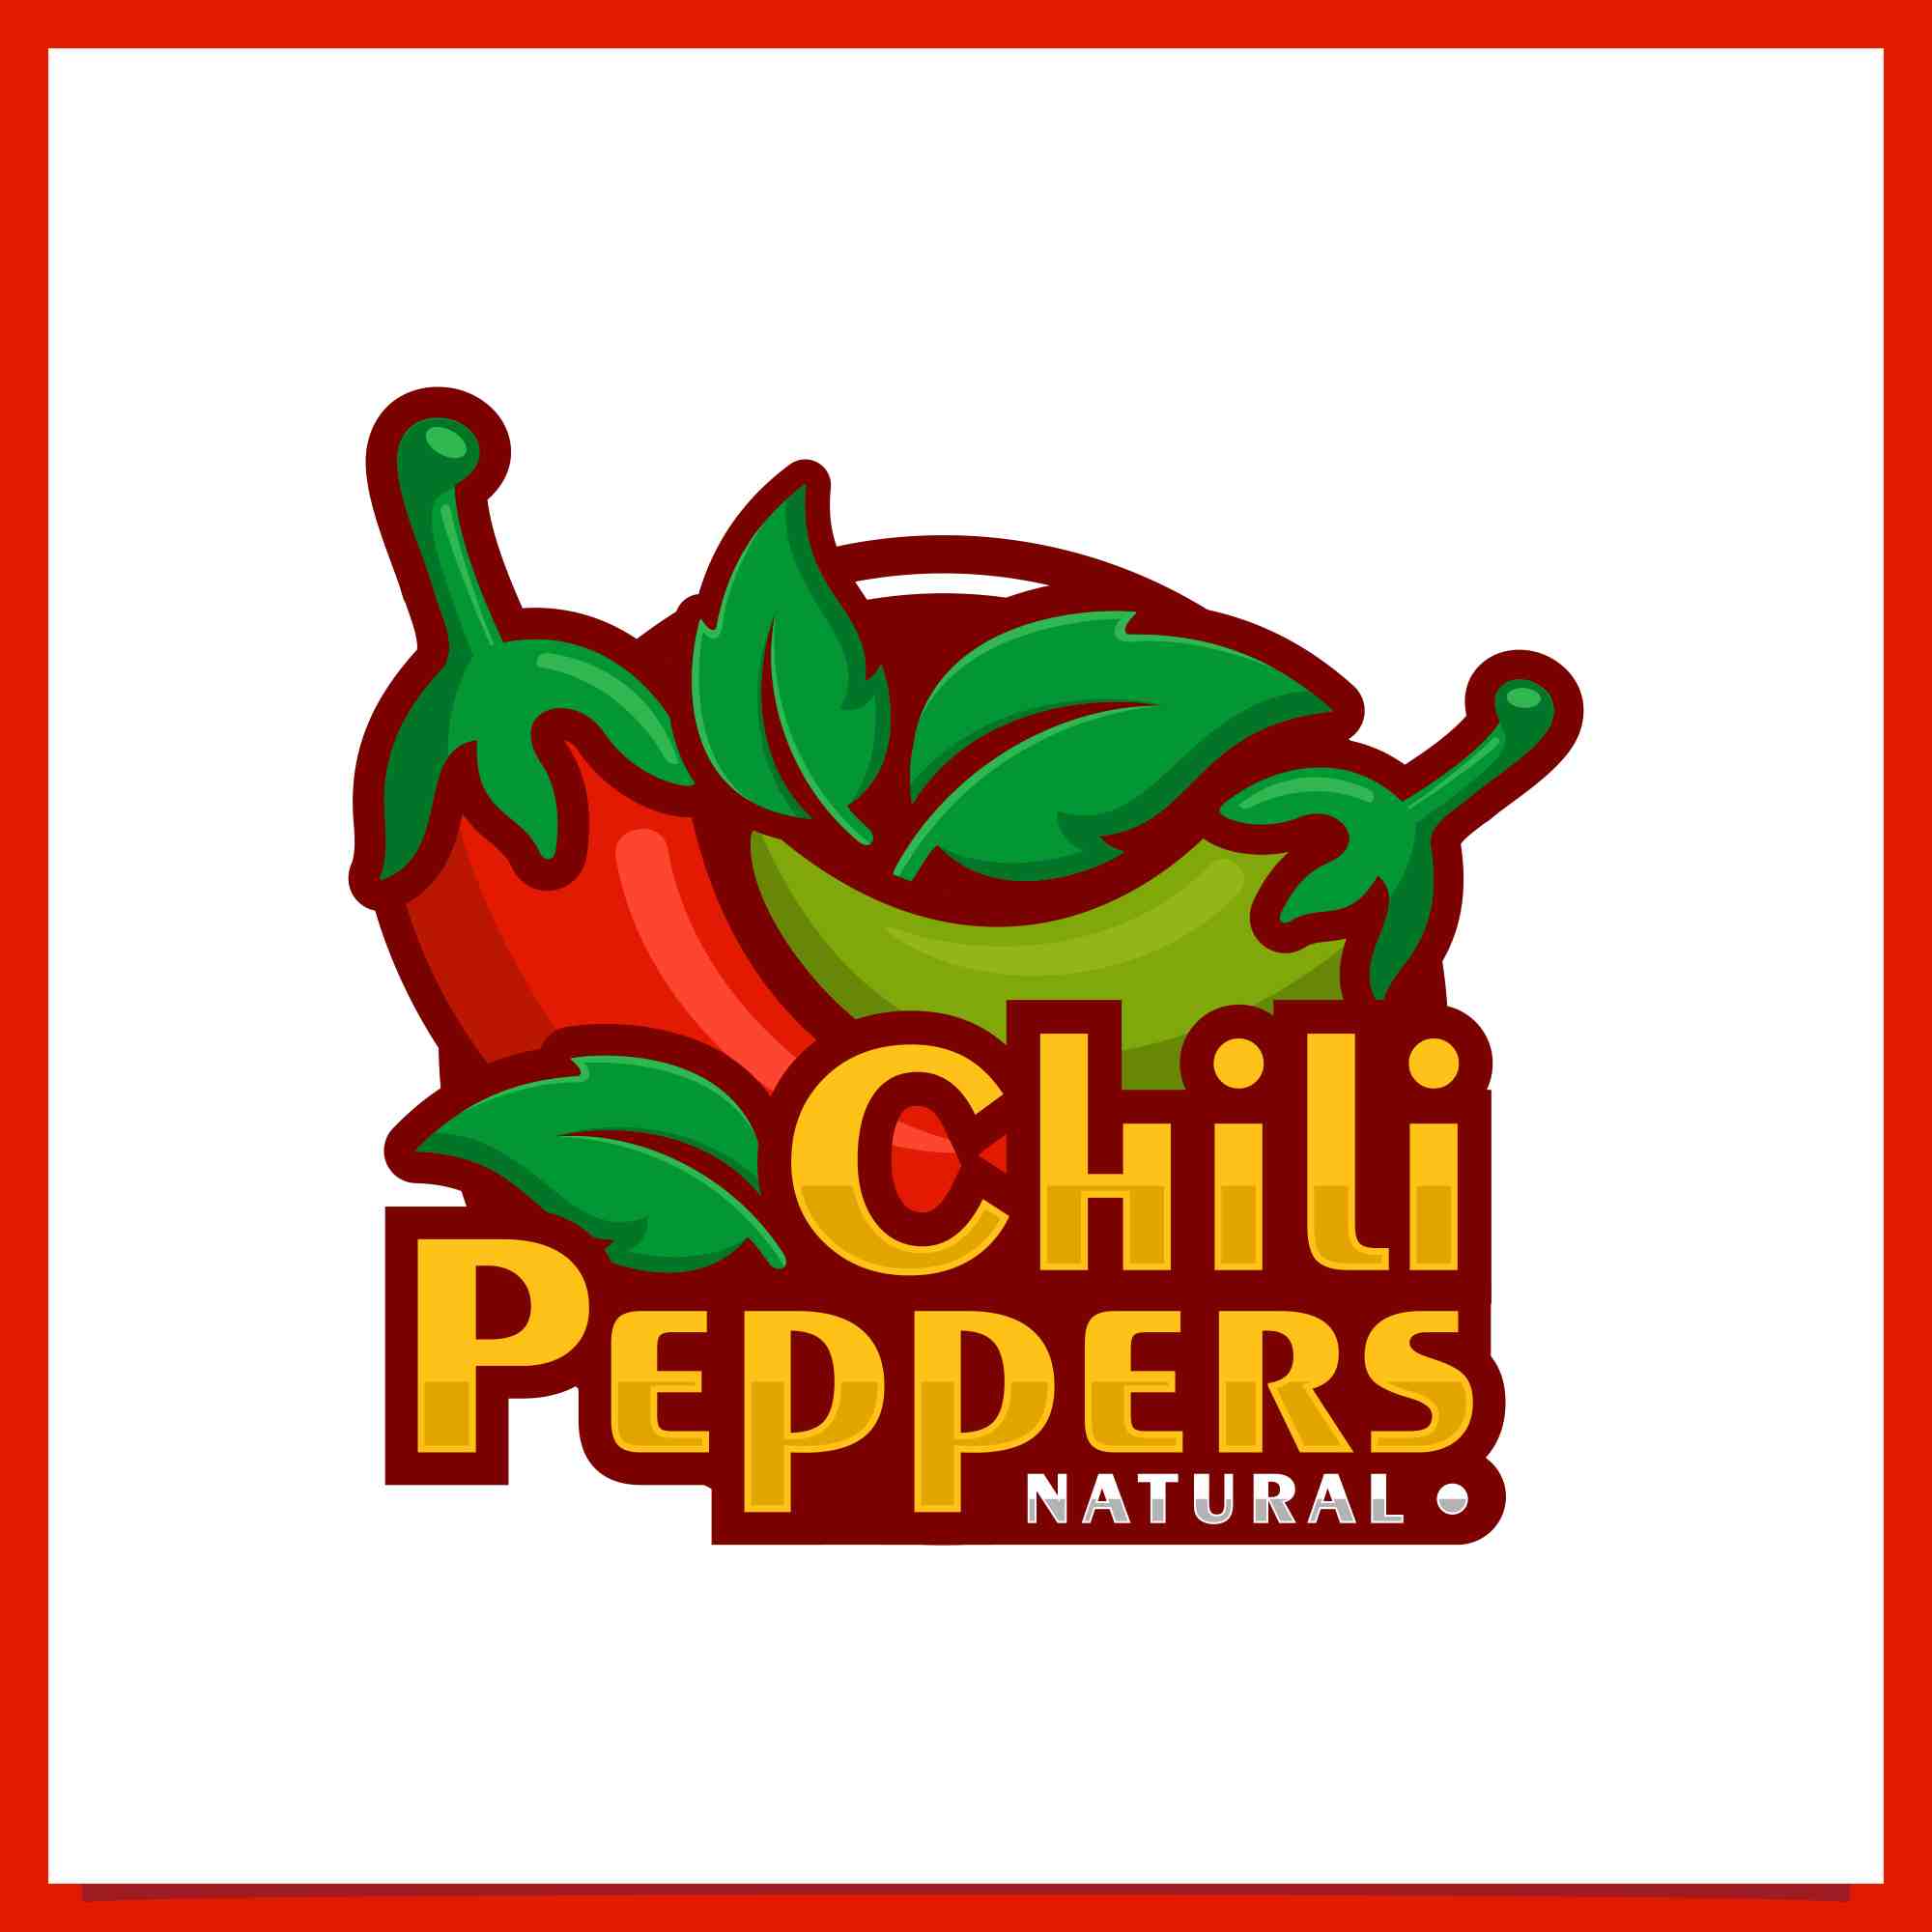 chili pepper badge logo design 5 721